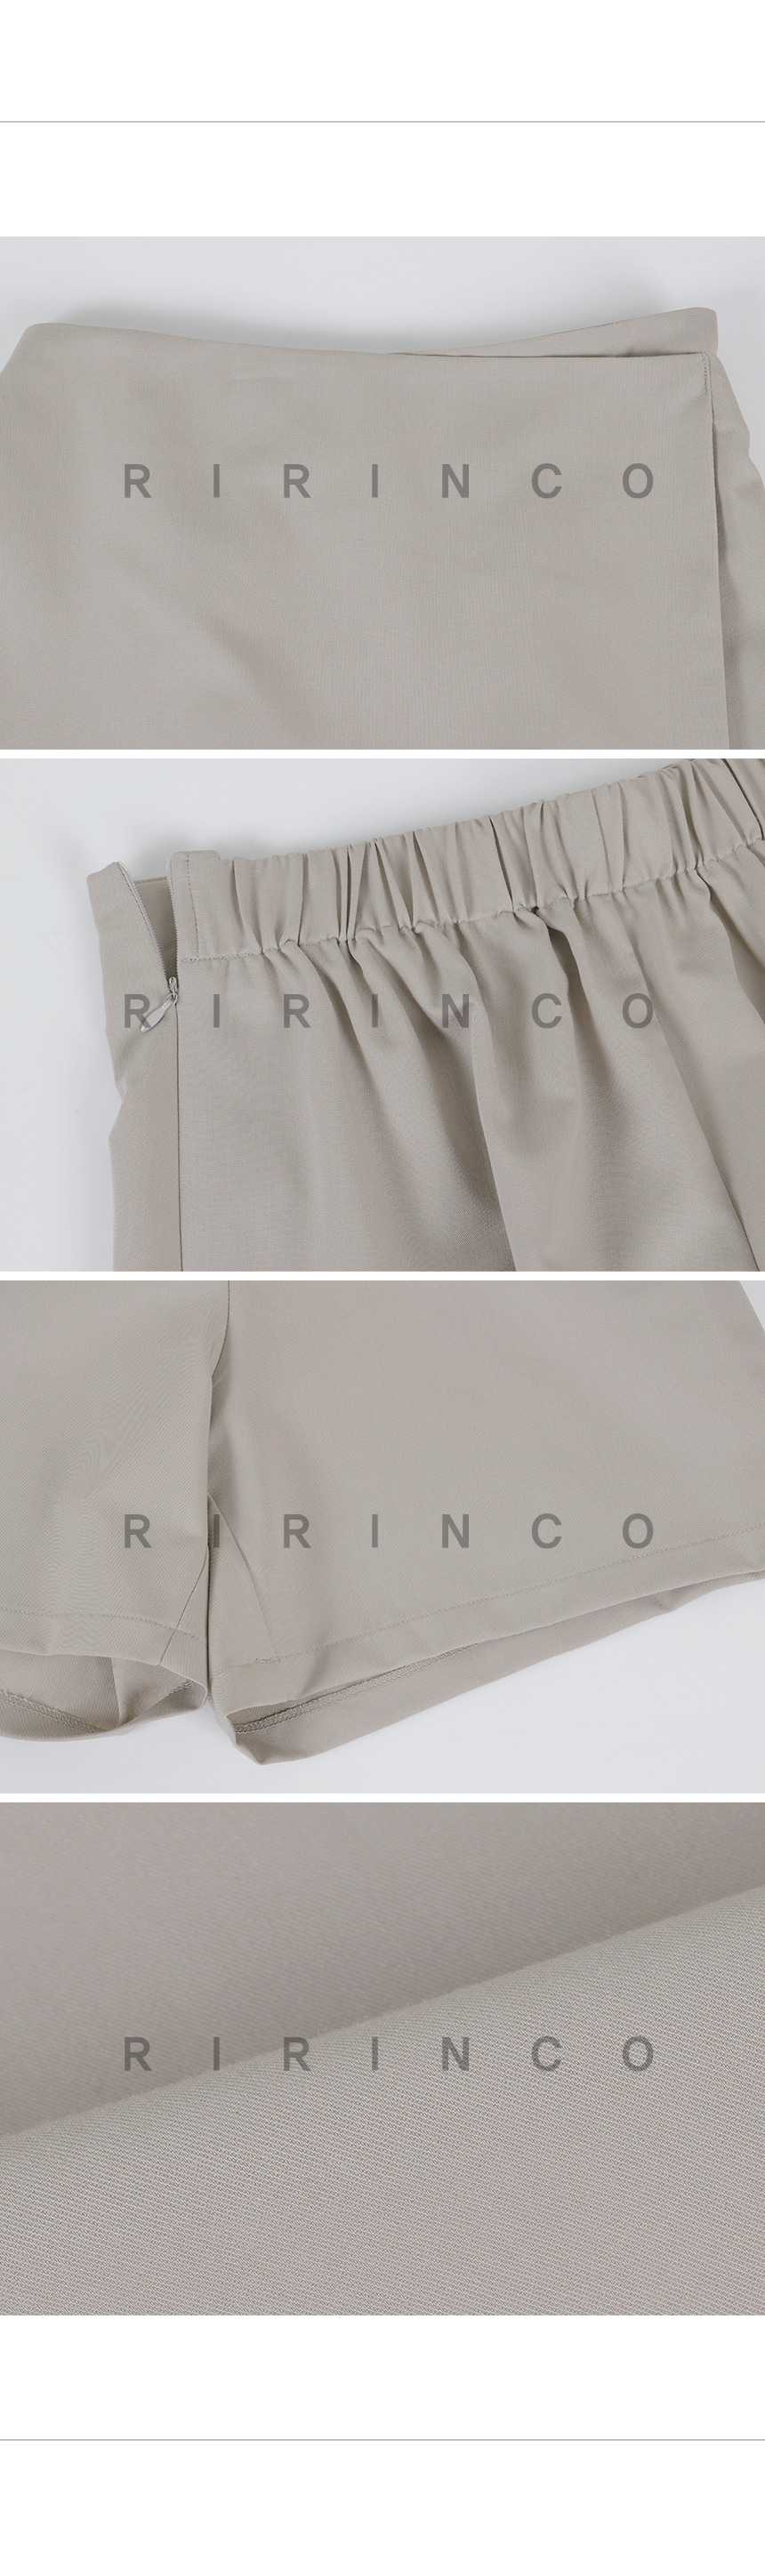 RIRINCO ラップスタイルウエストゴムミニスカートパンツ